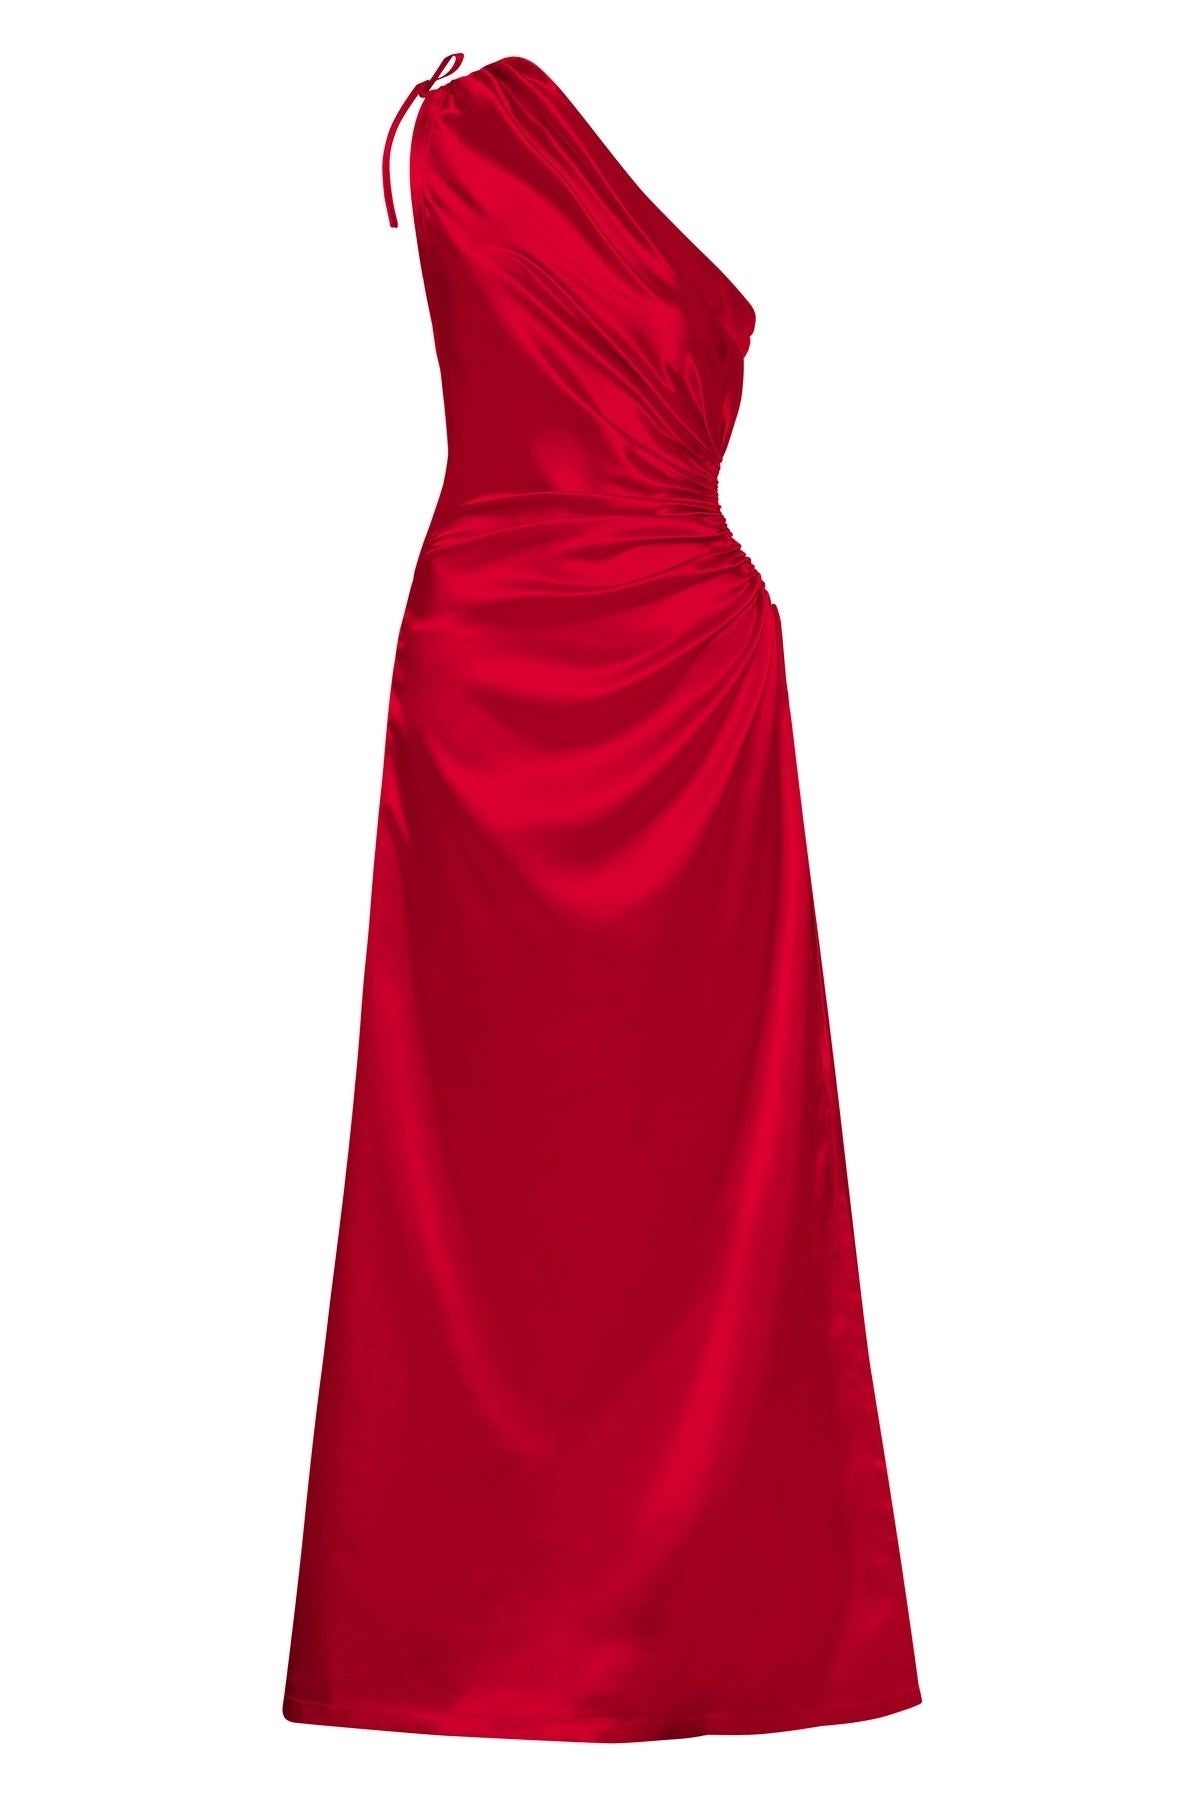 Sonya SONYA MODA Nour Maxi Dress (Red) - RRP $380 - 2_f5e32951-8fe7-4f18-9d34-62a7da145448.jpg